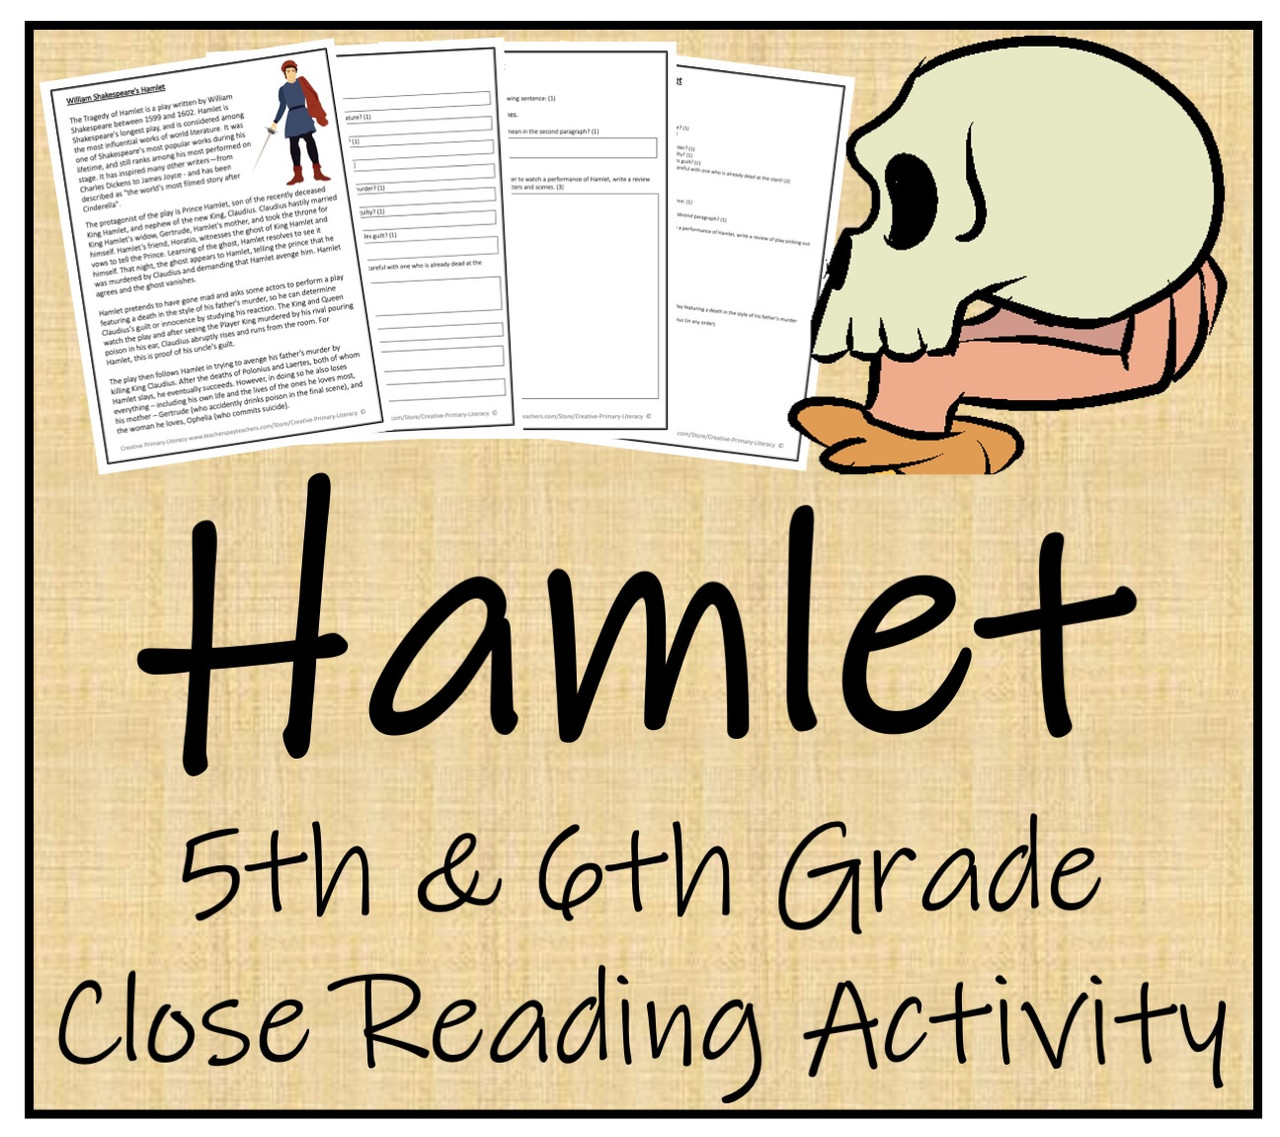 William Shakespeare's Hamlet Close Reading Activity | 5th Grade & 6th Grade